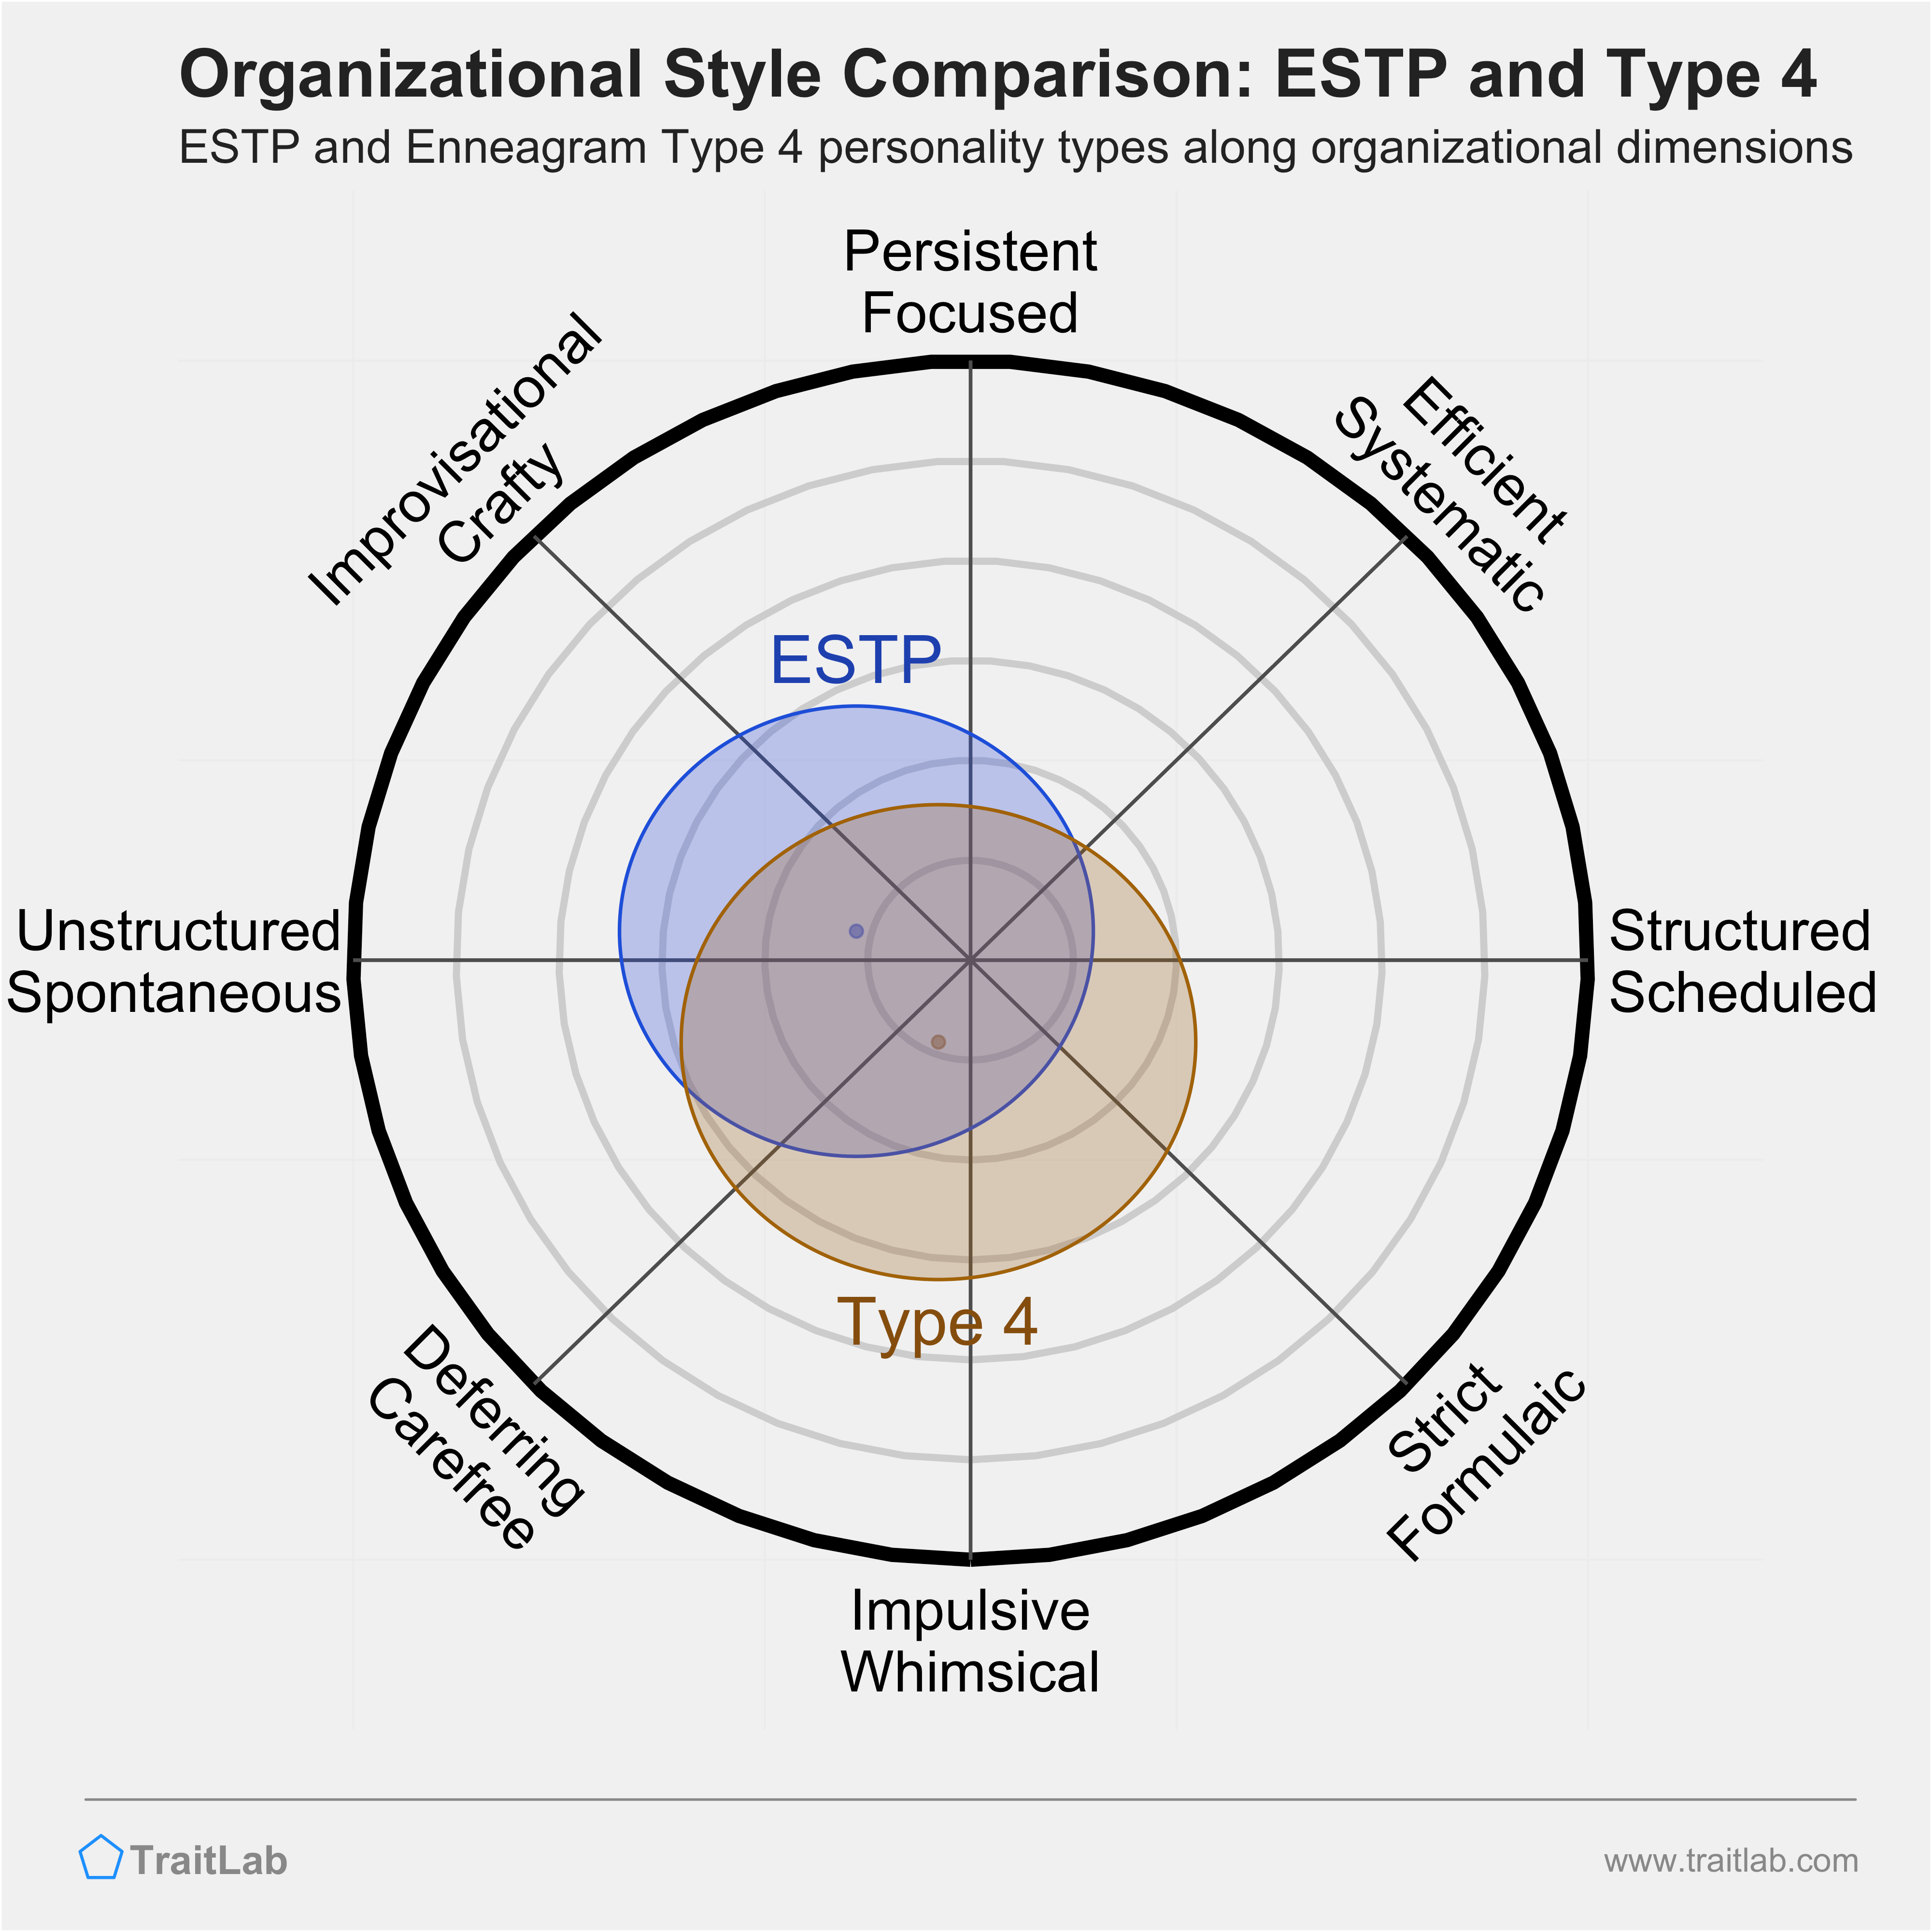 ESTP and Type 4 comparison across organizational dimensions